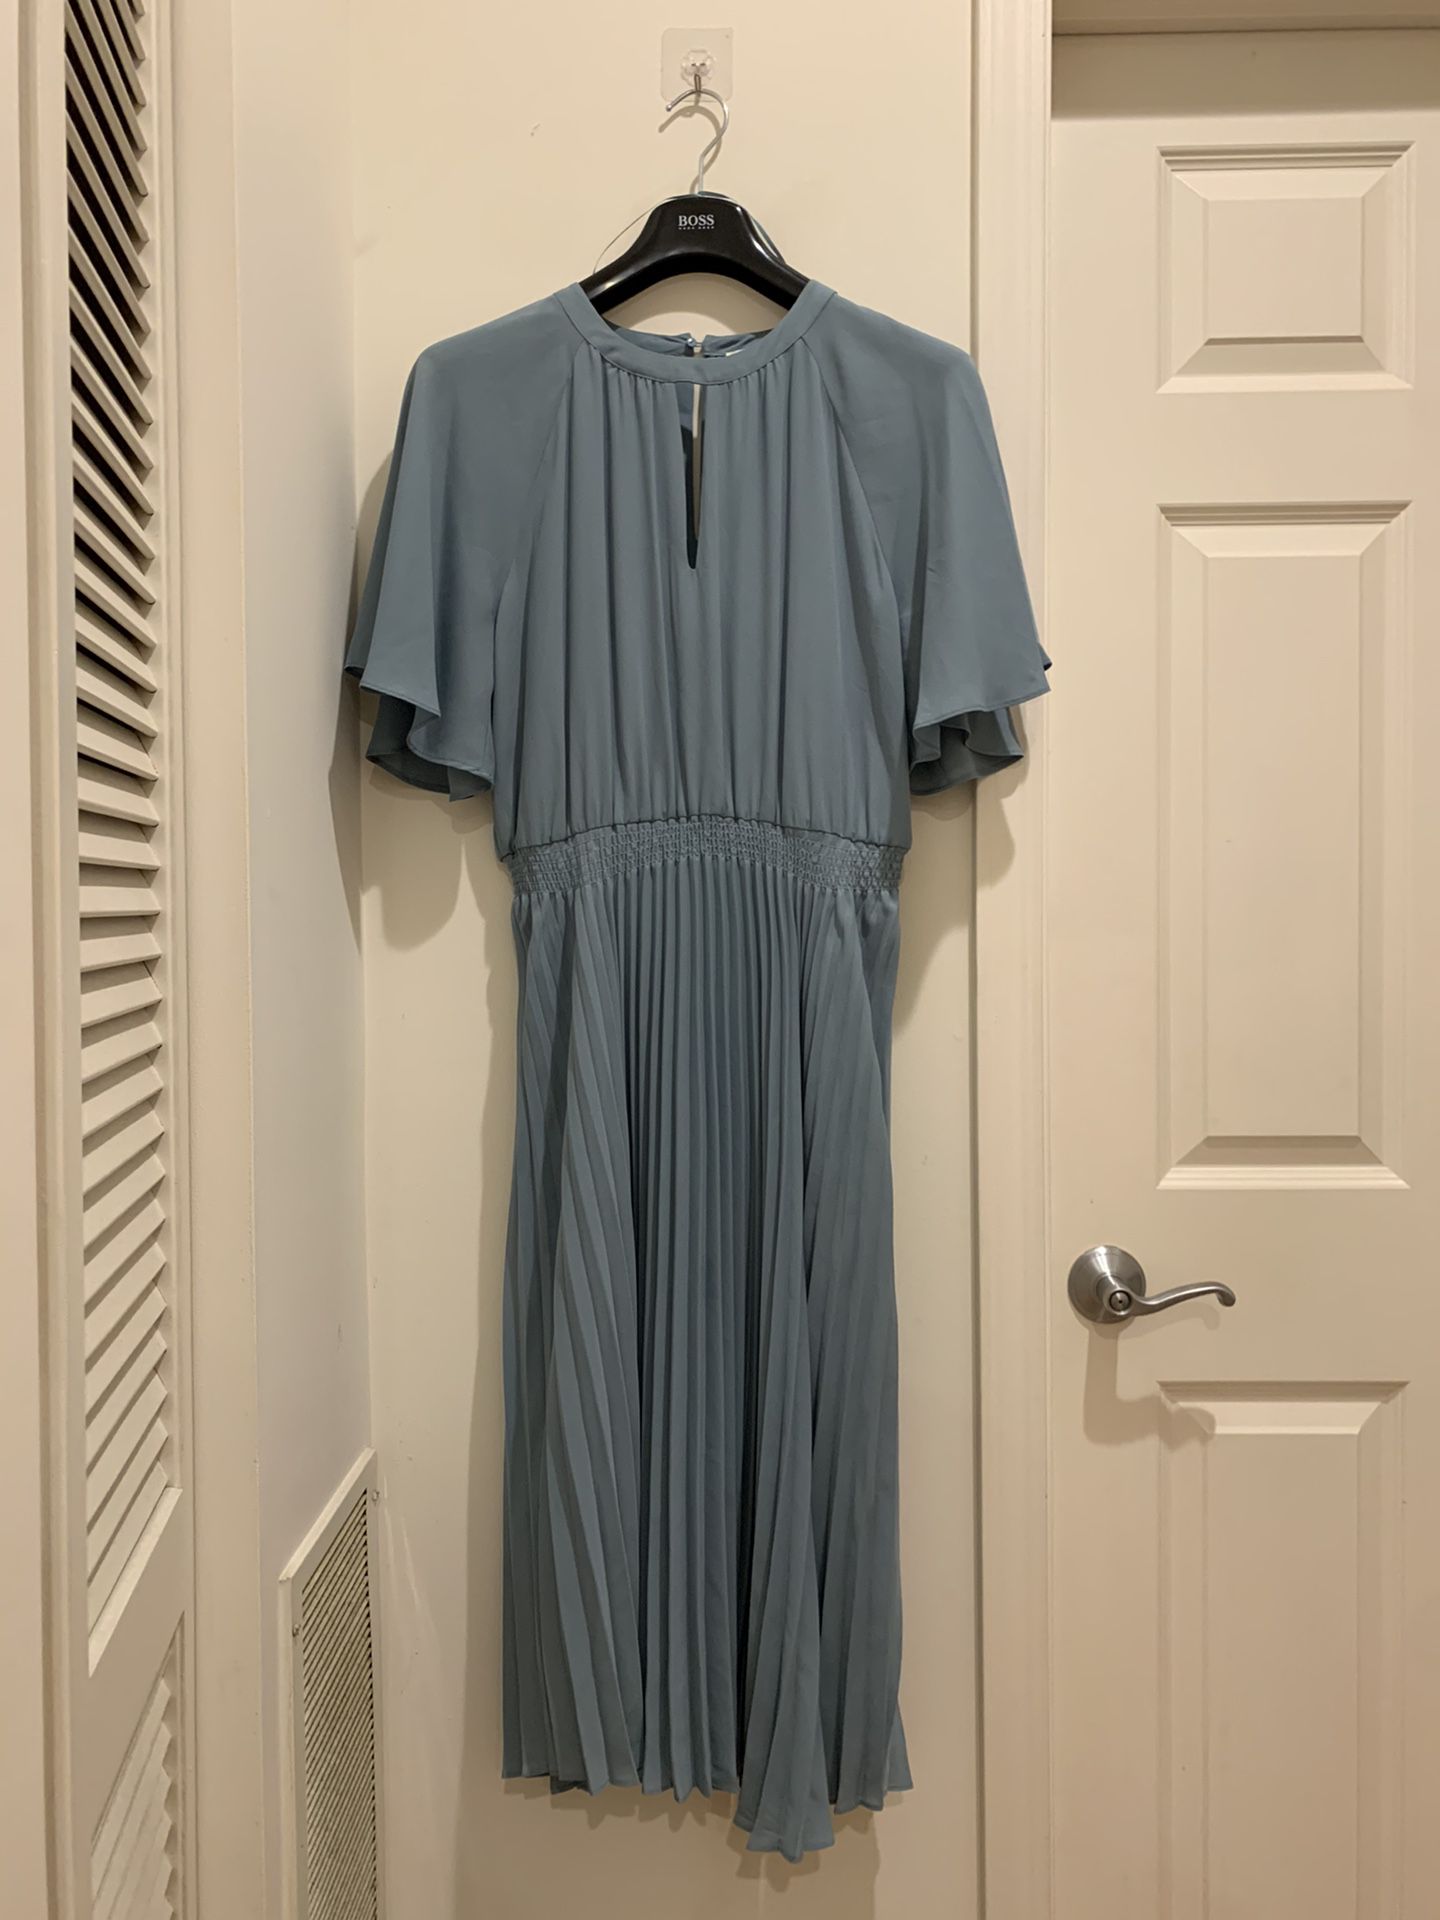 Size 8(medium) blue dress